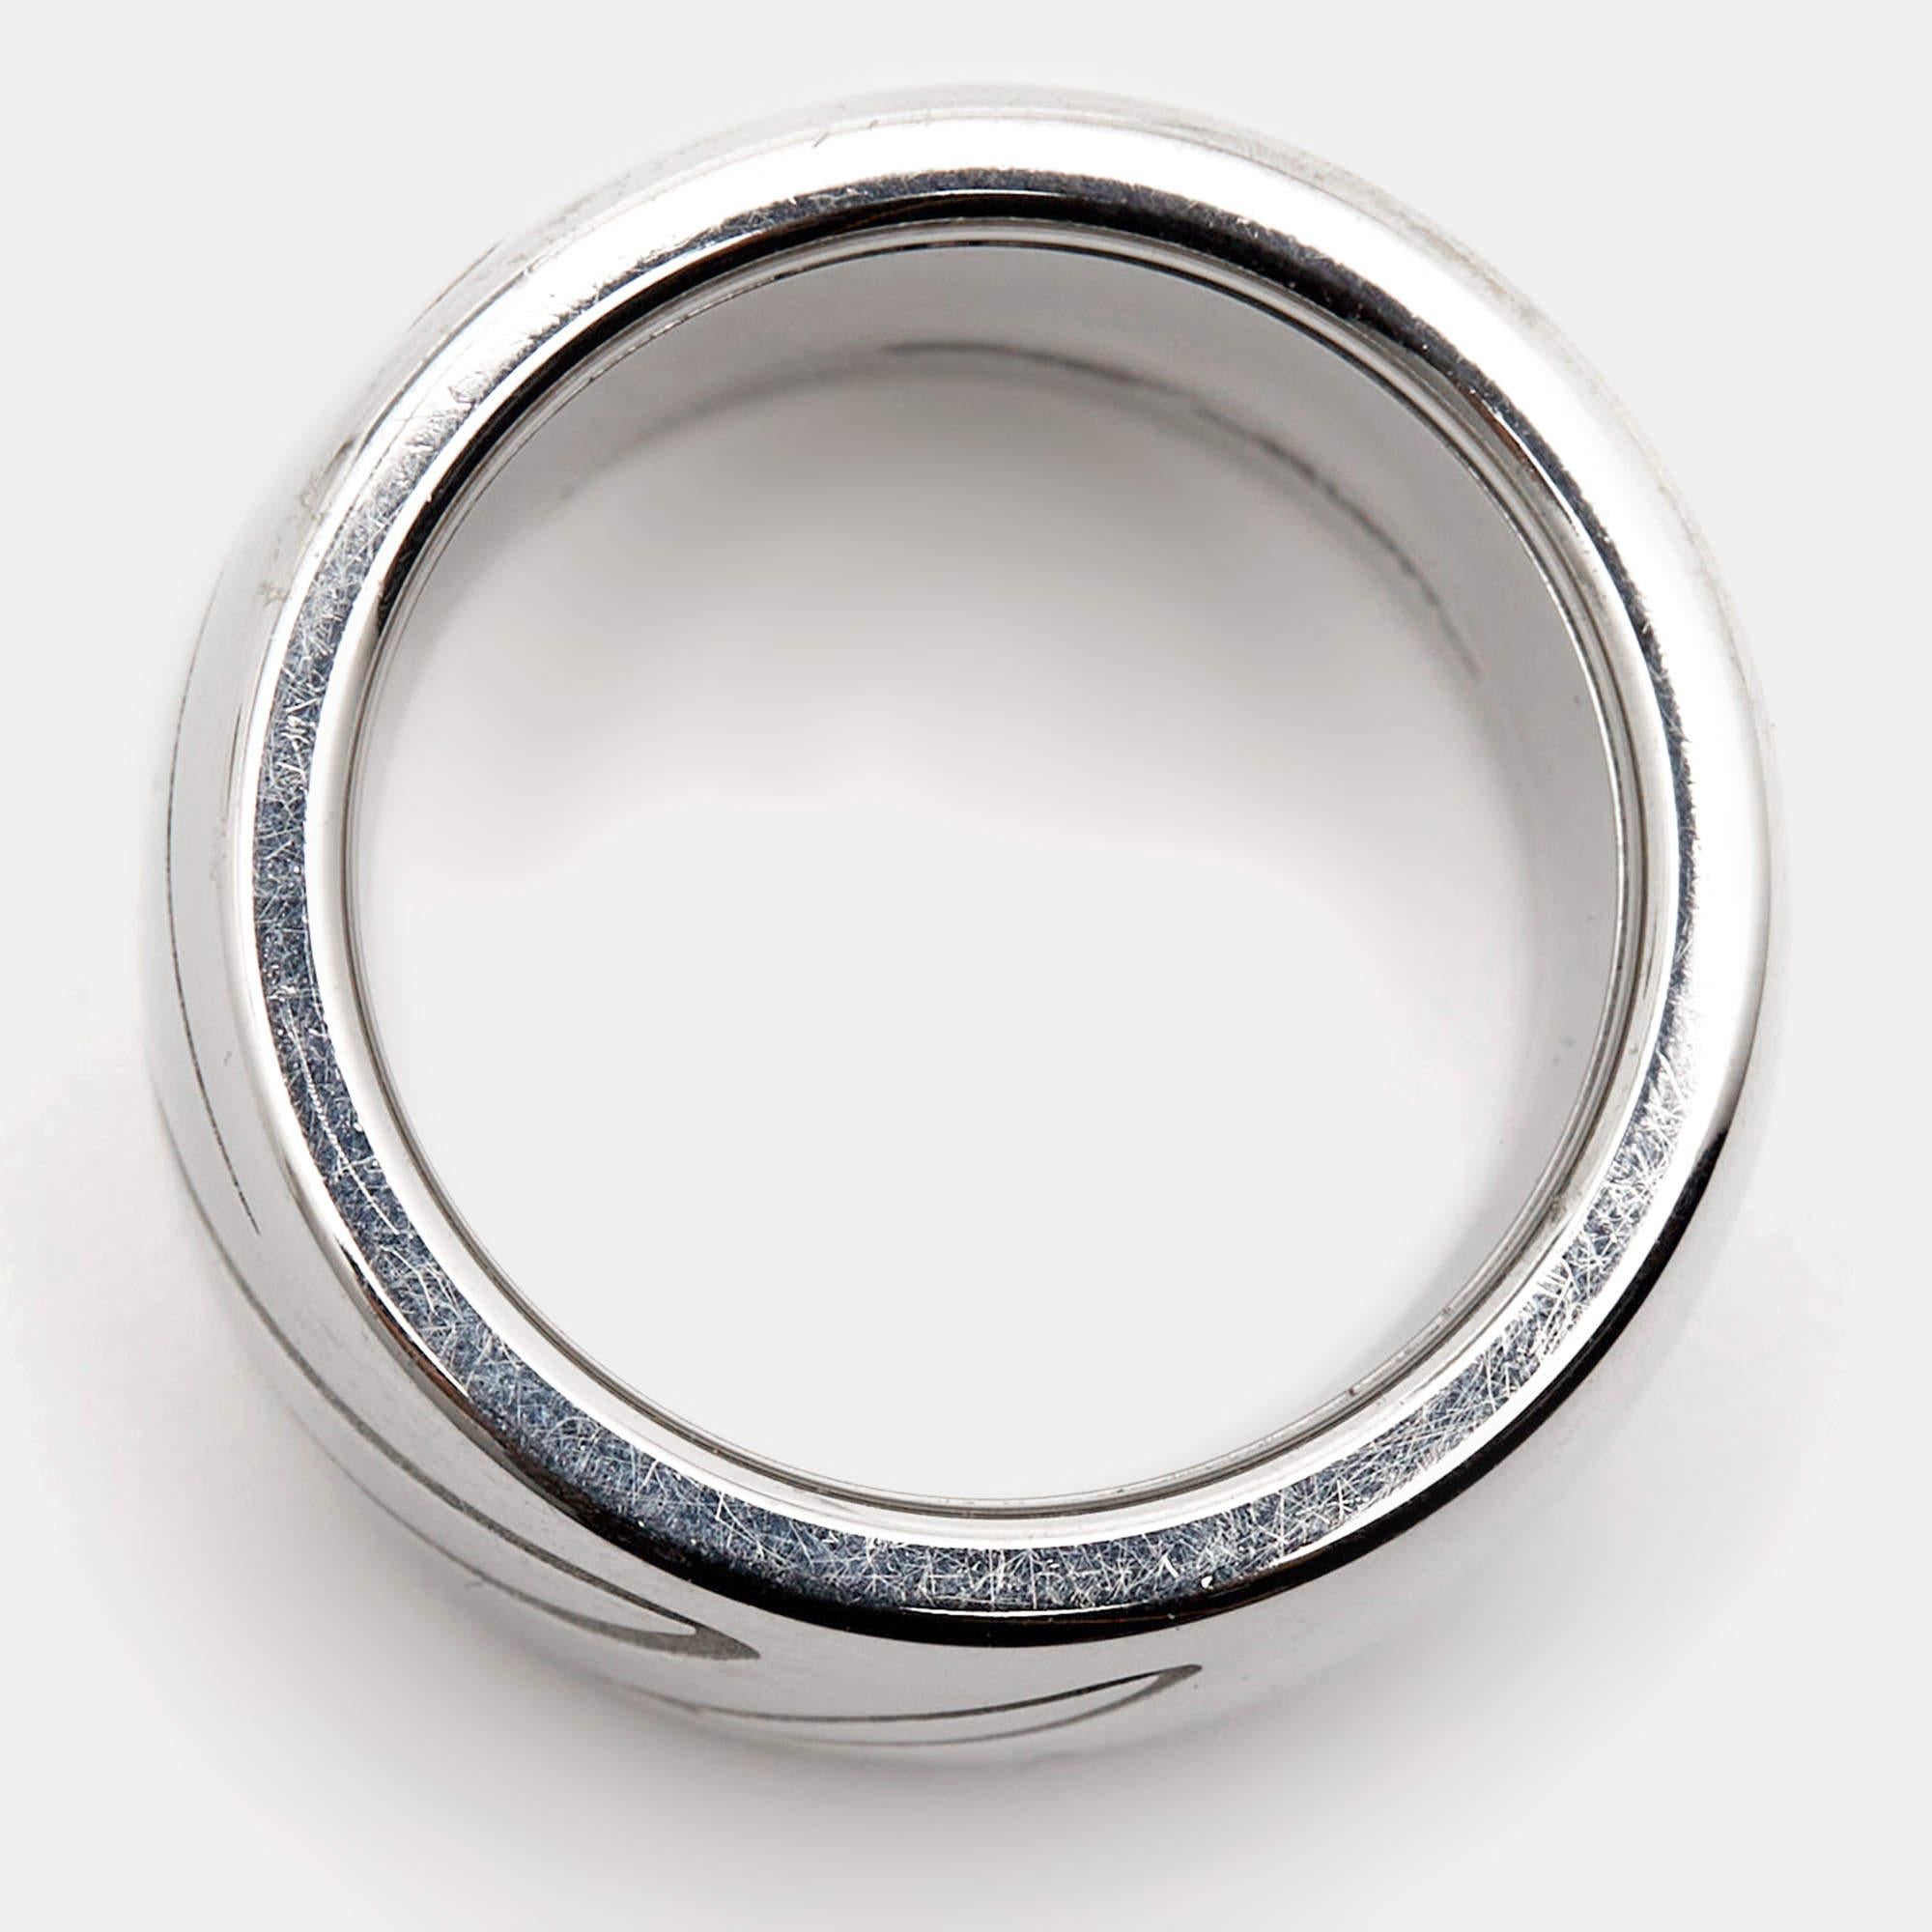 Chopard Chopardissimo 18k White Gold Ring Size 51 In Good Condition For Sale In Dubai, Al Qouz 2